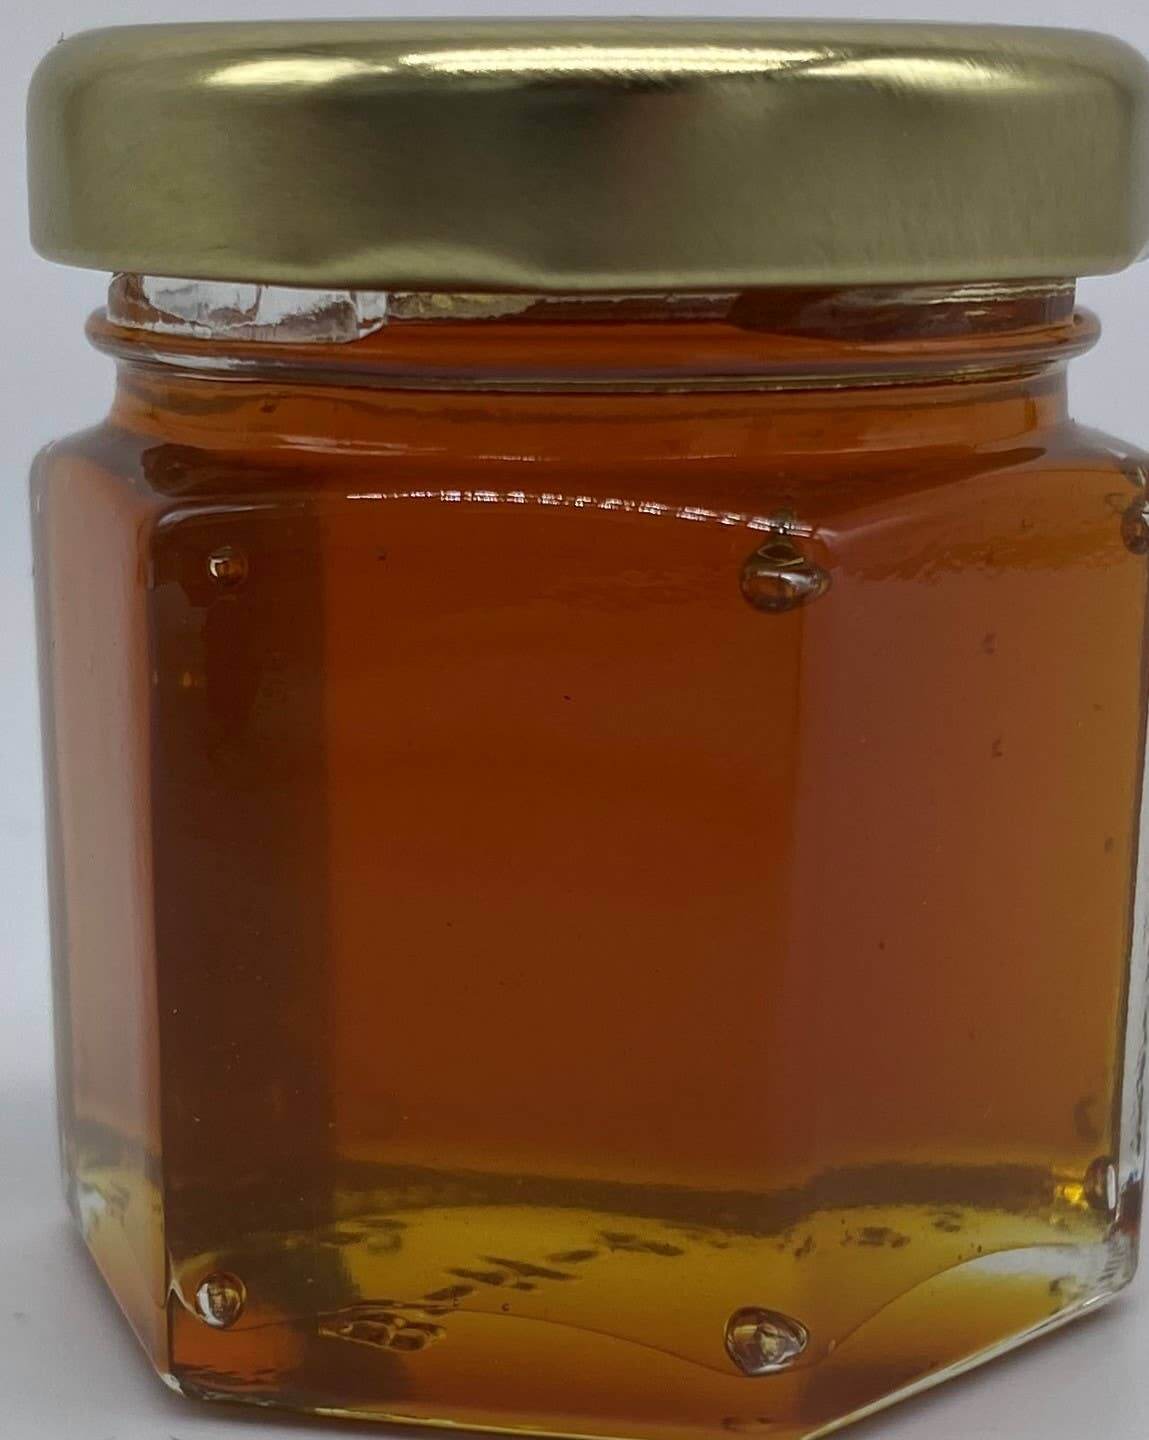 Mini Hexagon Jar of Honey